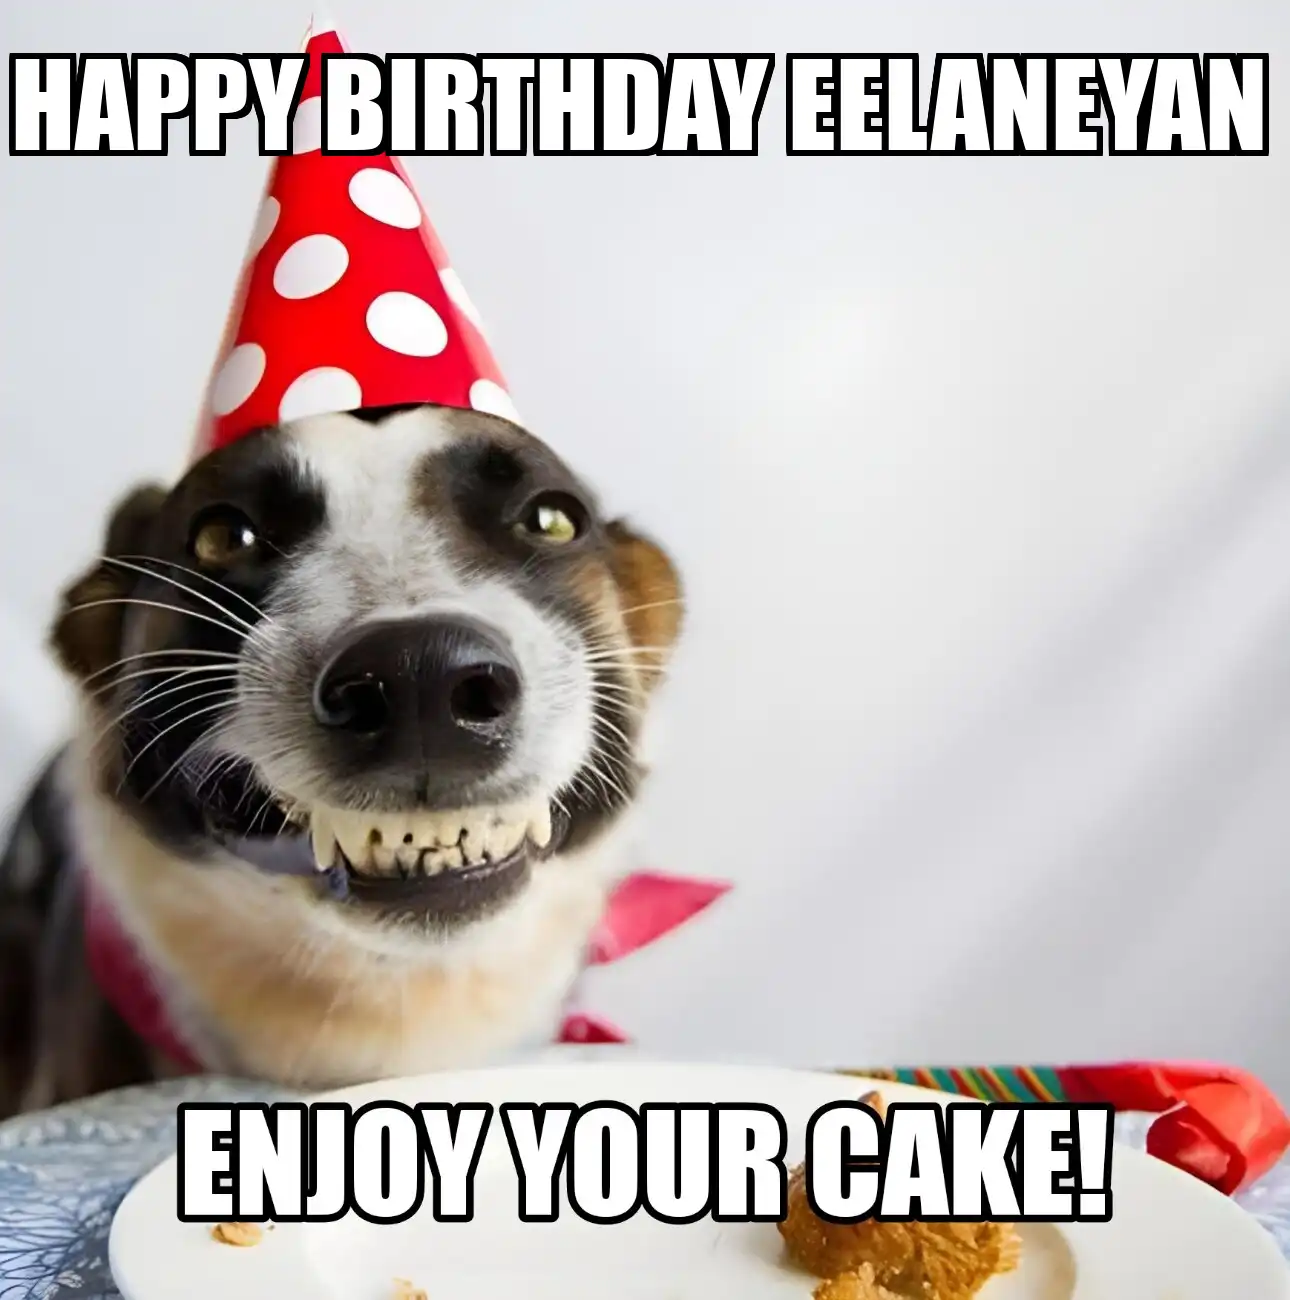 Happy Birthday Eelaneyan Enjoy Your Cake Dog Meme